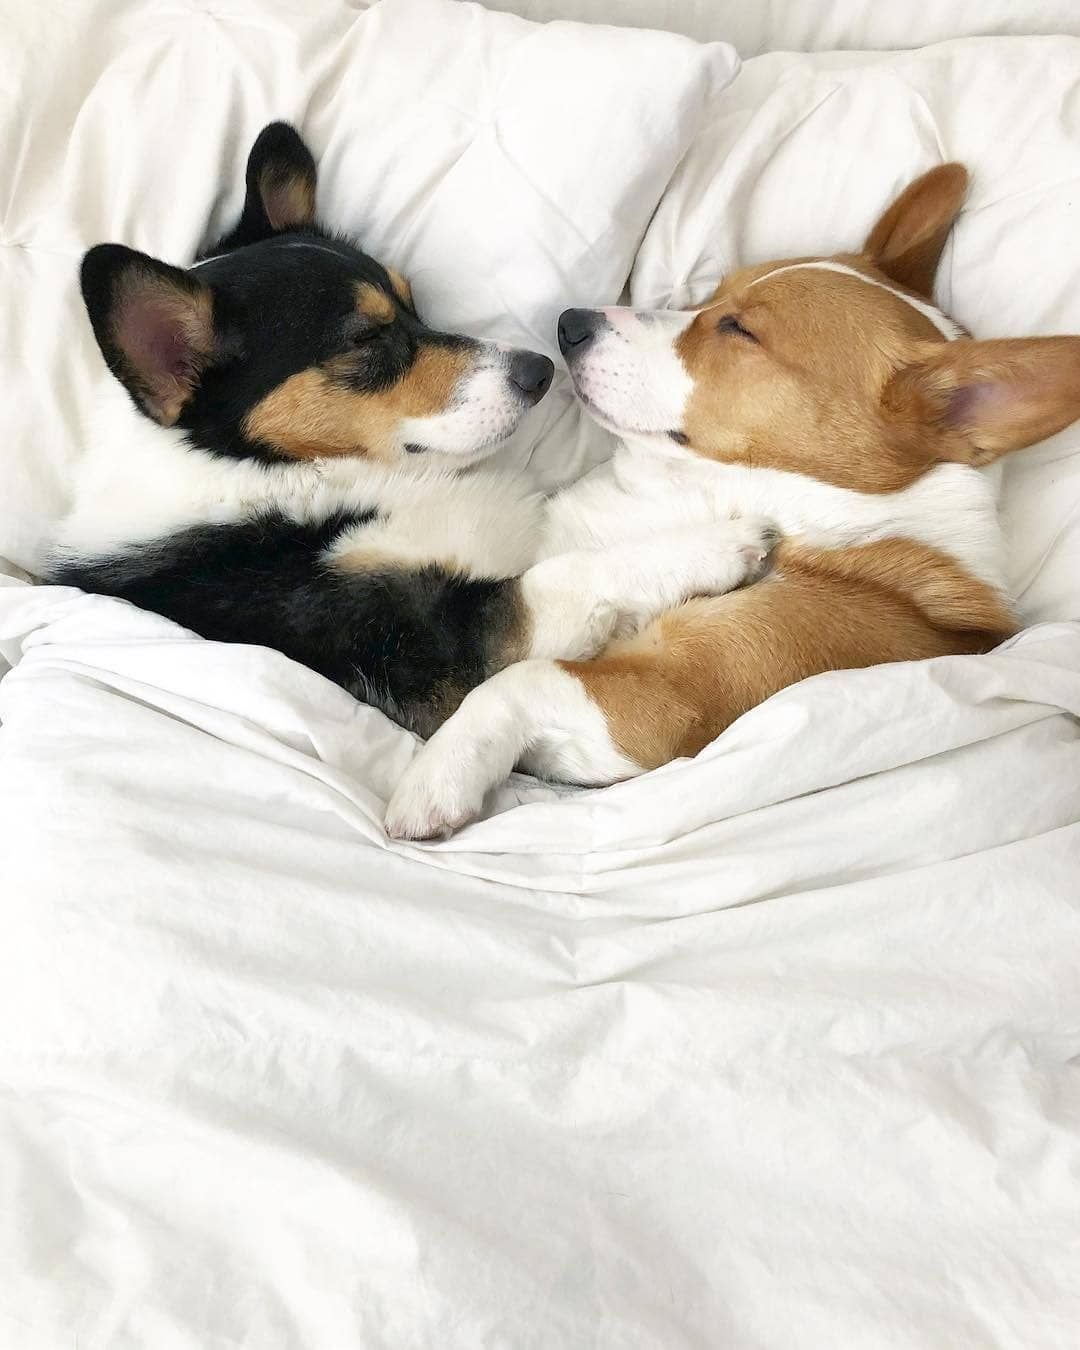 Собаки вместе спят. Вельш-корги. Корги пемброк.